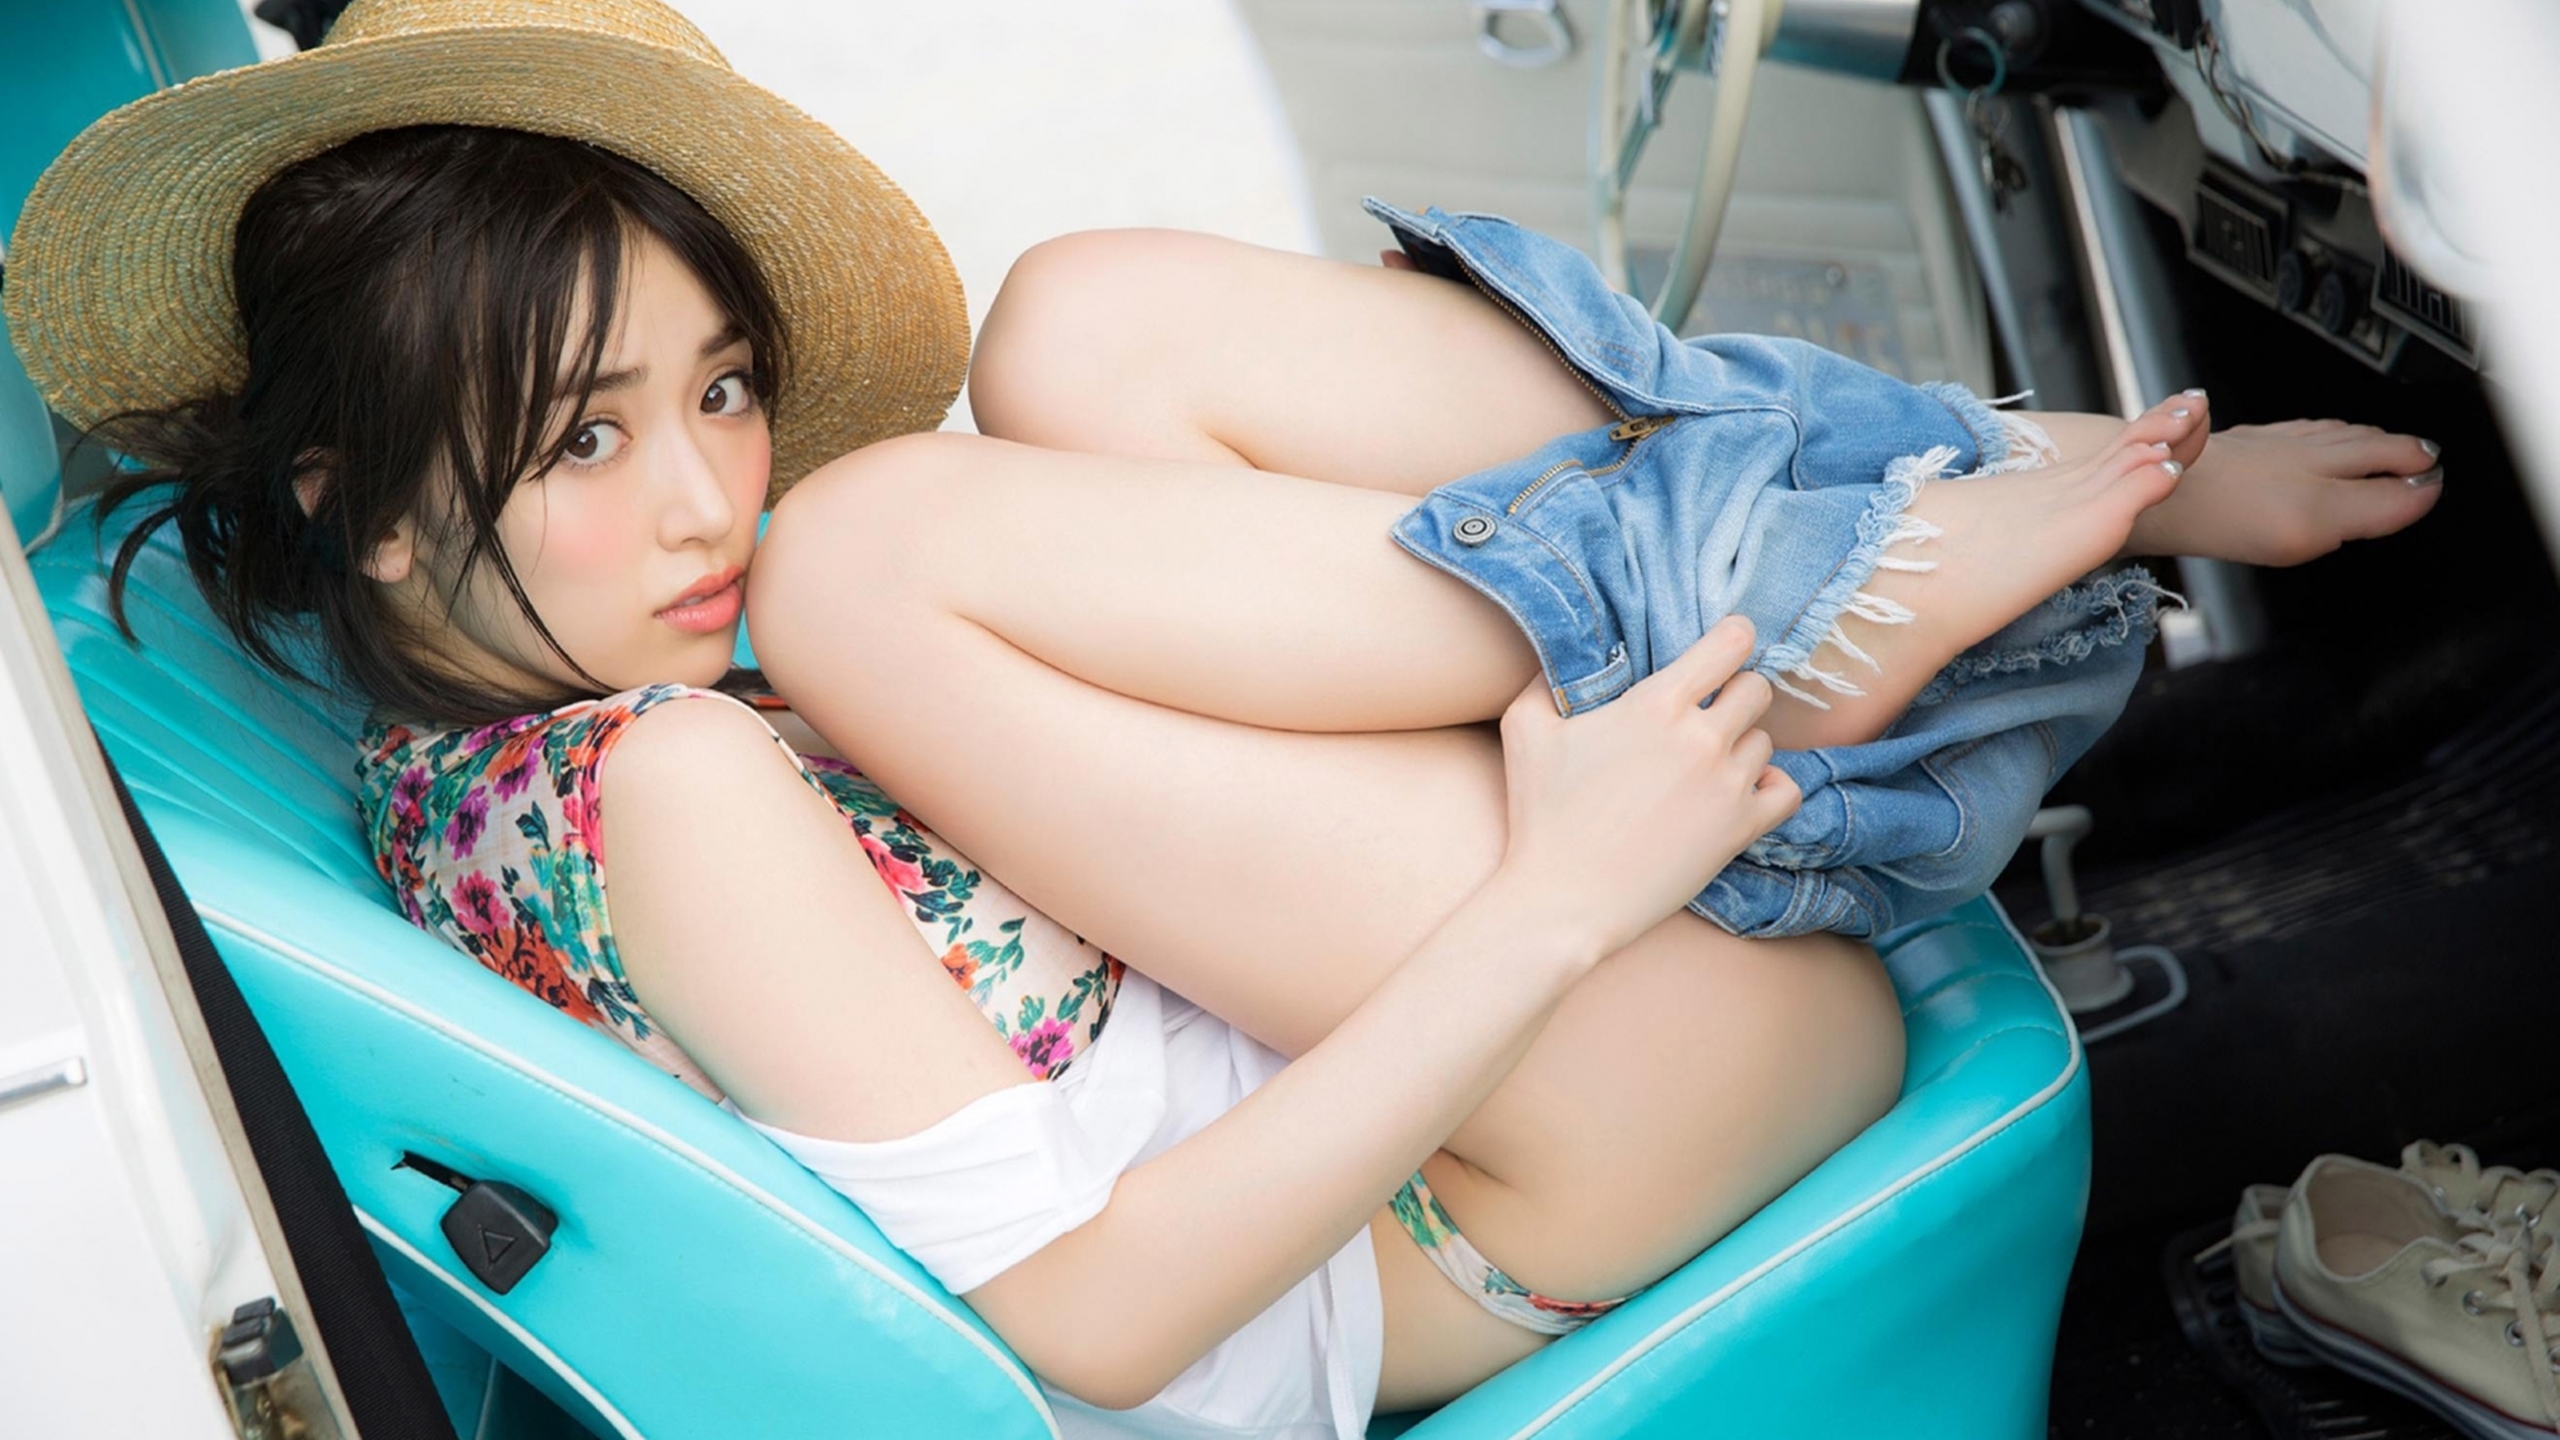 Chisaki Hama Sitting Barefoot Feet Shirt Jeans Legs Asian 2560x1440